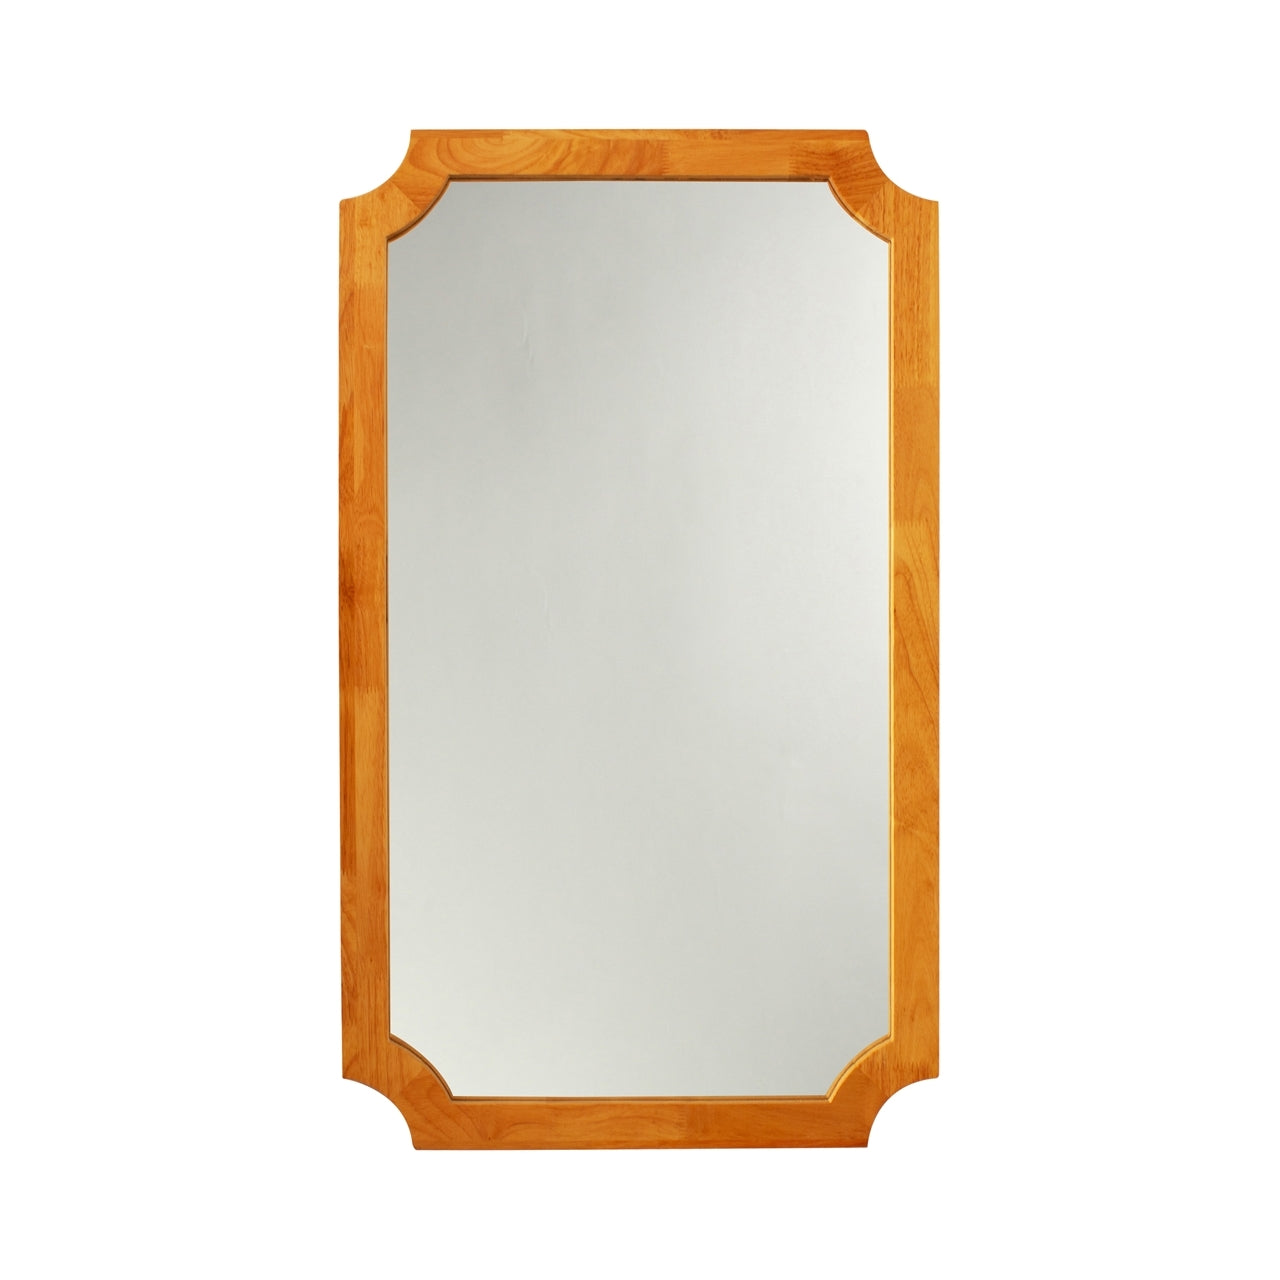 Reflection Maple Finish Rectangular Framed Wall Mirror 33" Height